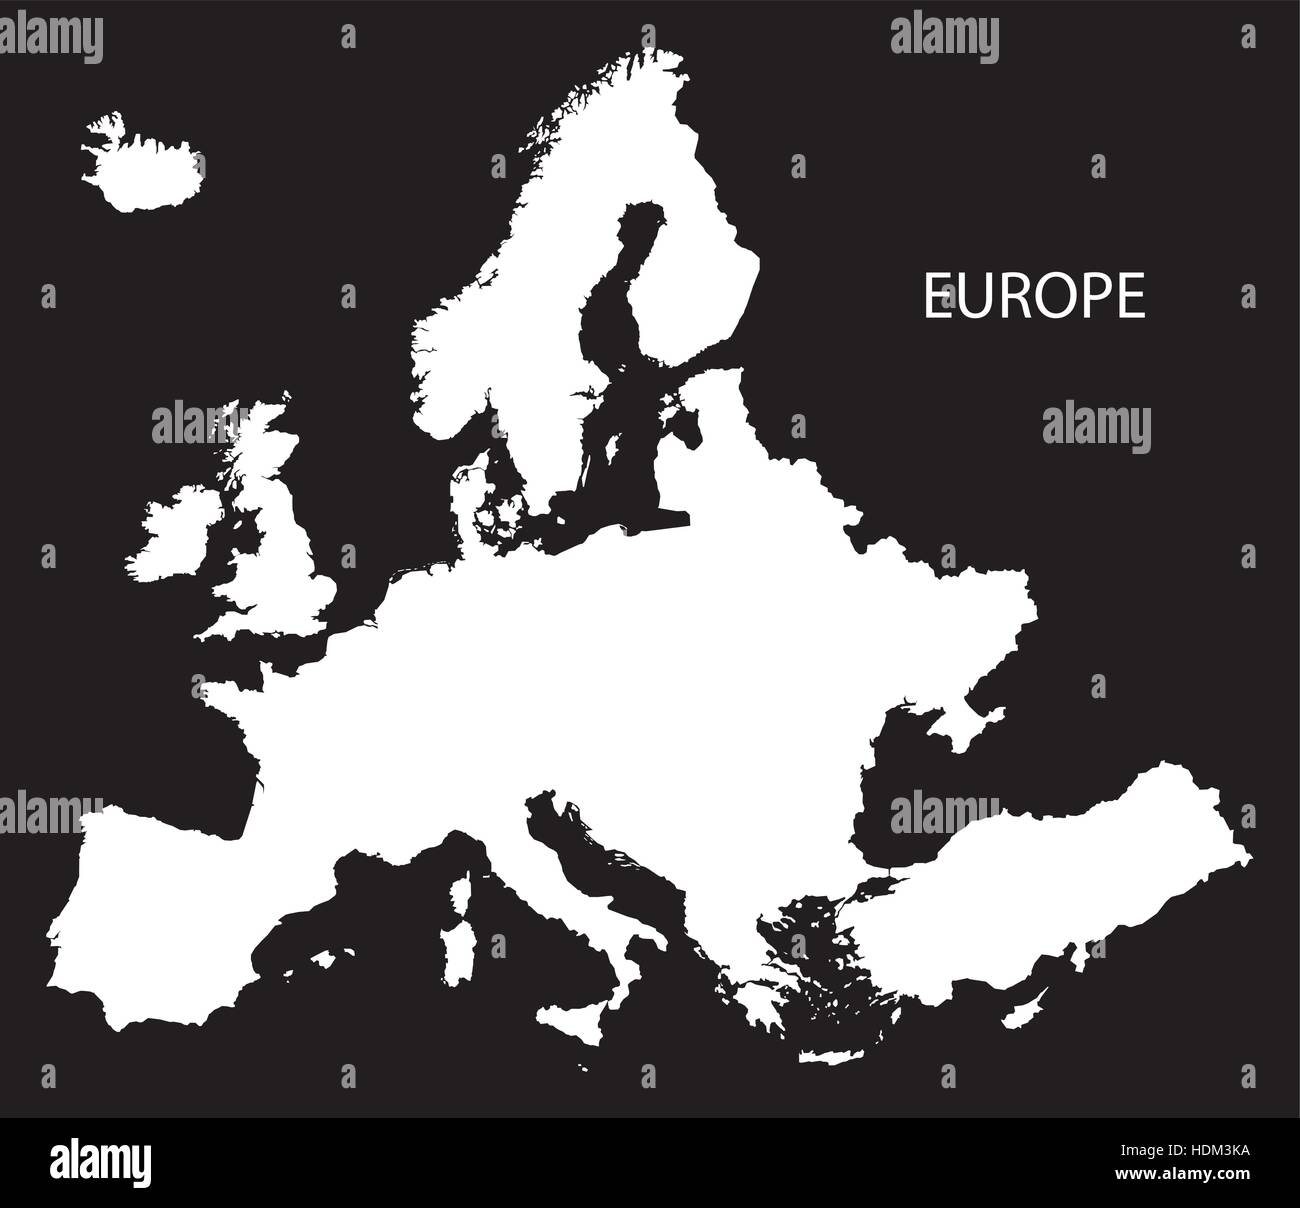 Europakarte schwarz-weiß-Abbildung Stock Vektor